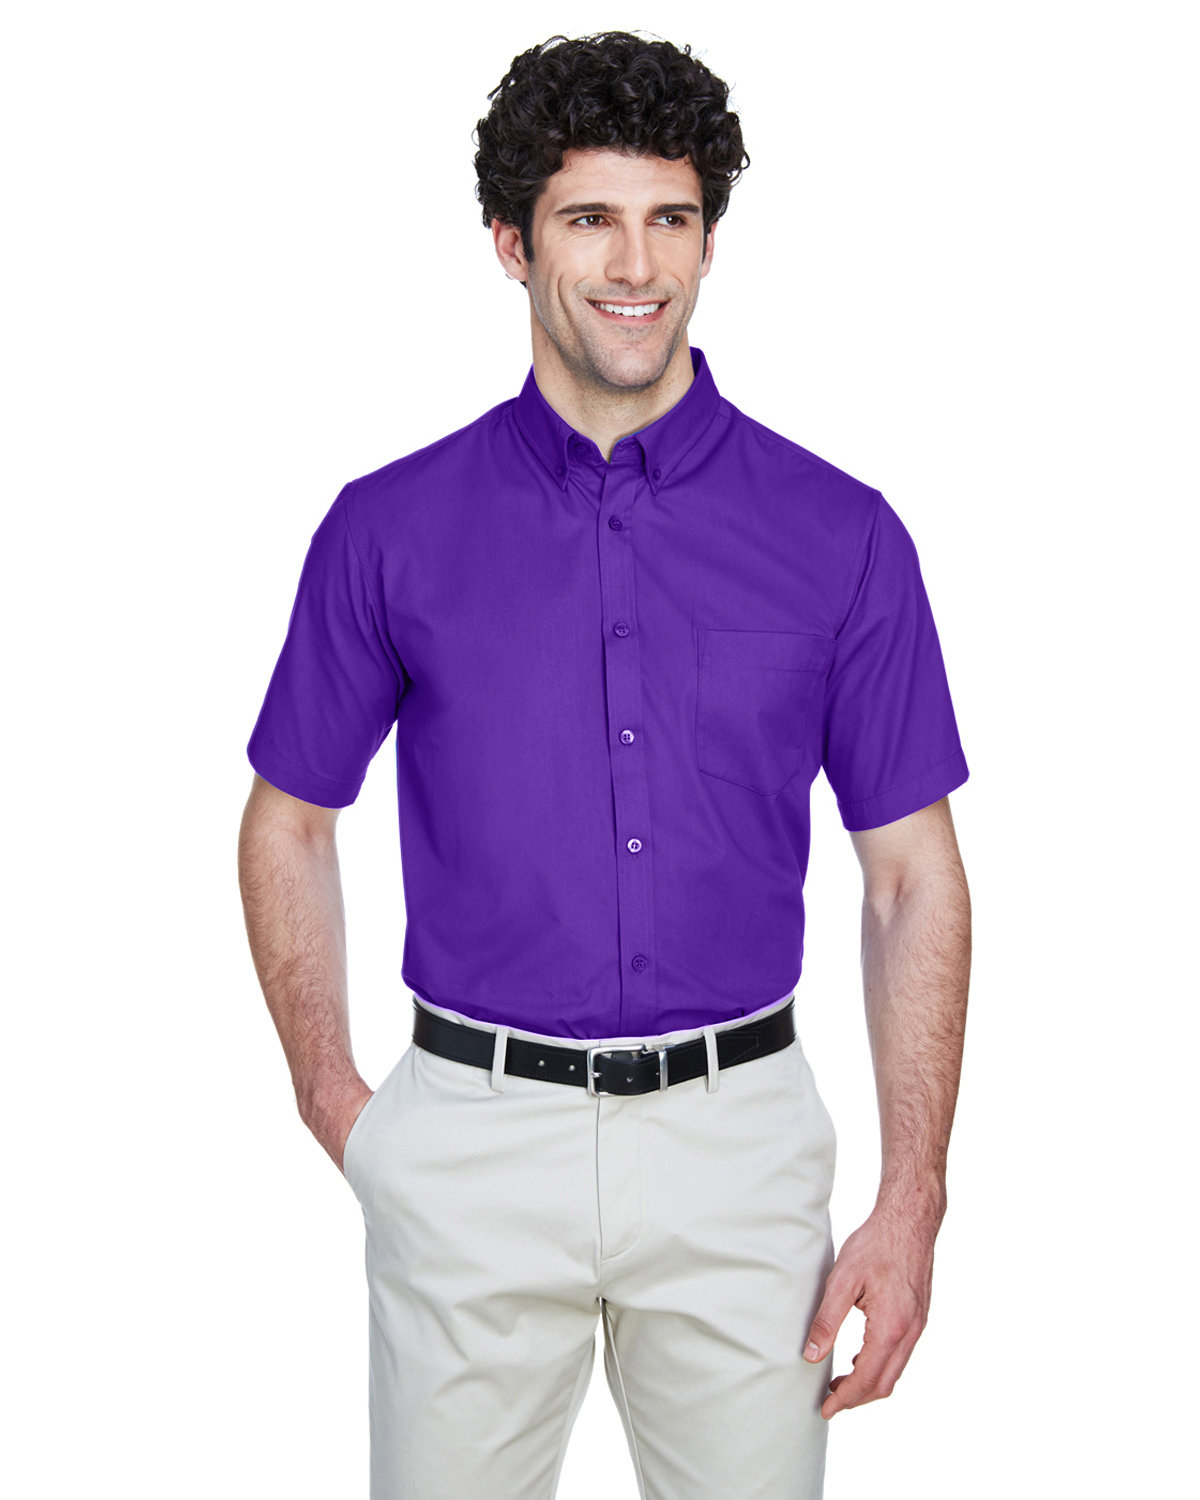 Core 365 Men's Optimum Short-Sleeve Twill Shirt CAMPUS PURPLE 